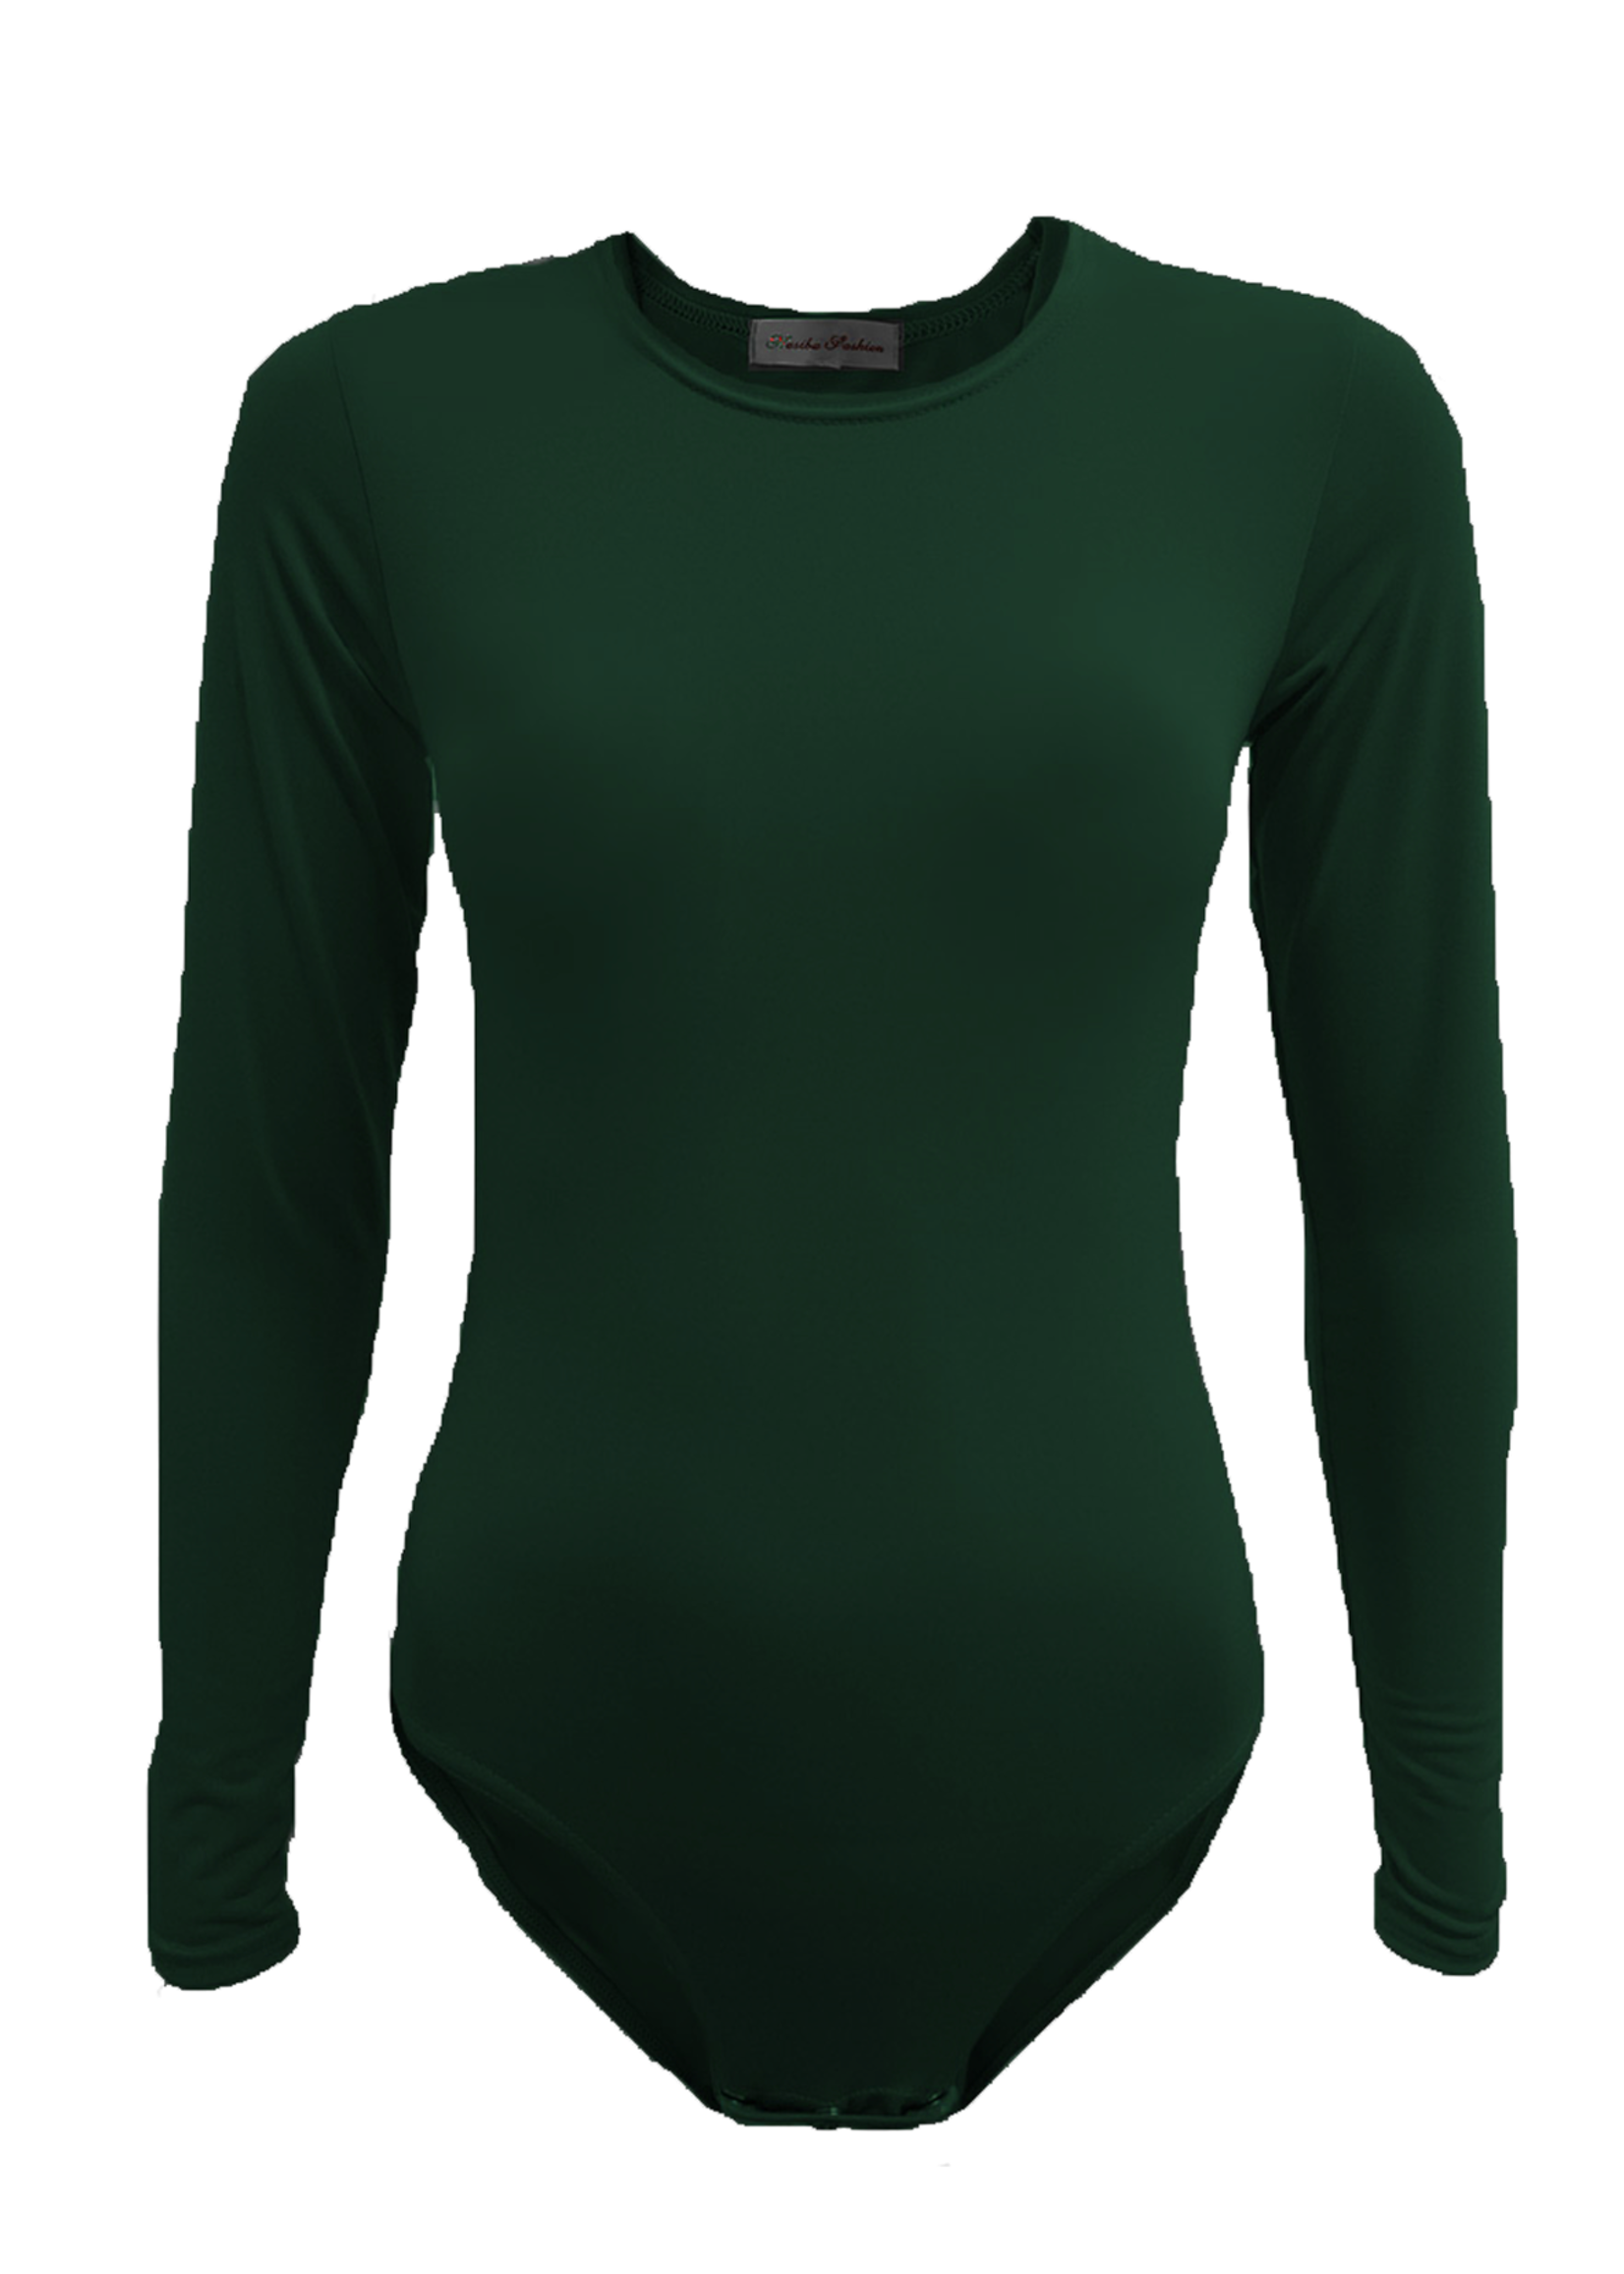 Lycra Bodysuit - Bottle Green